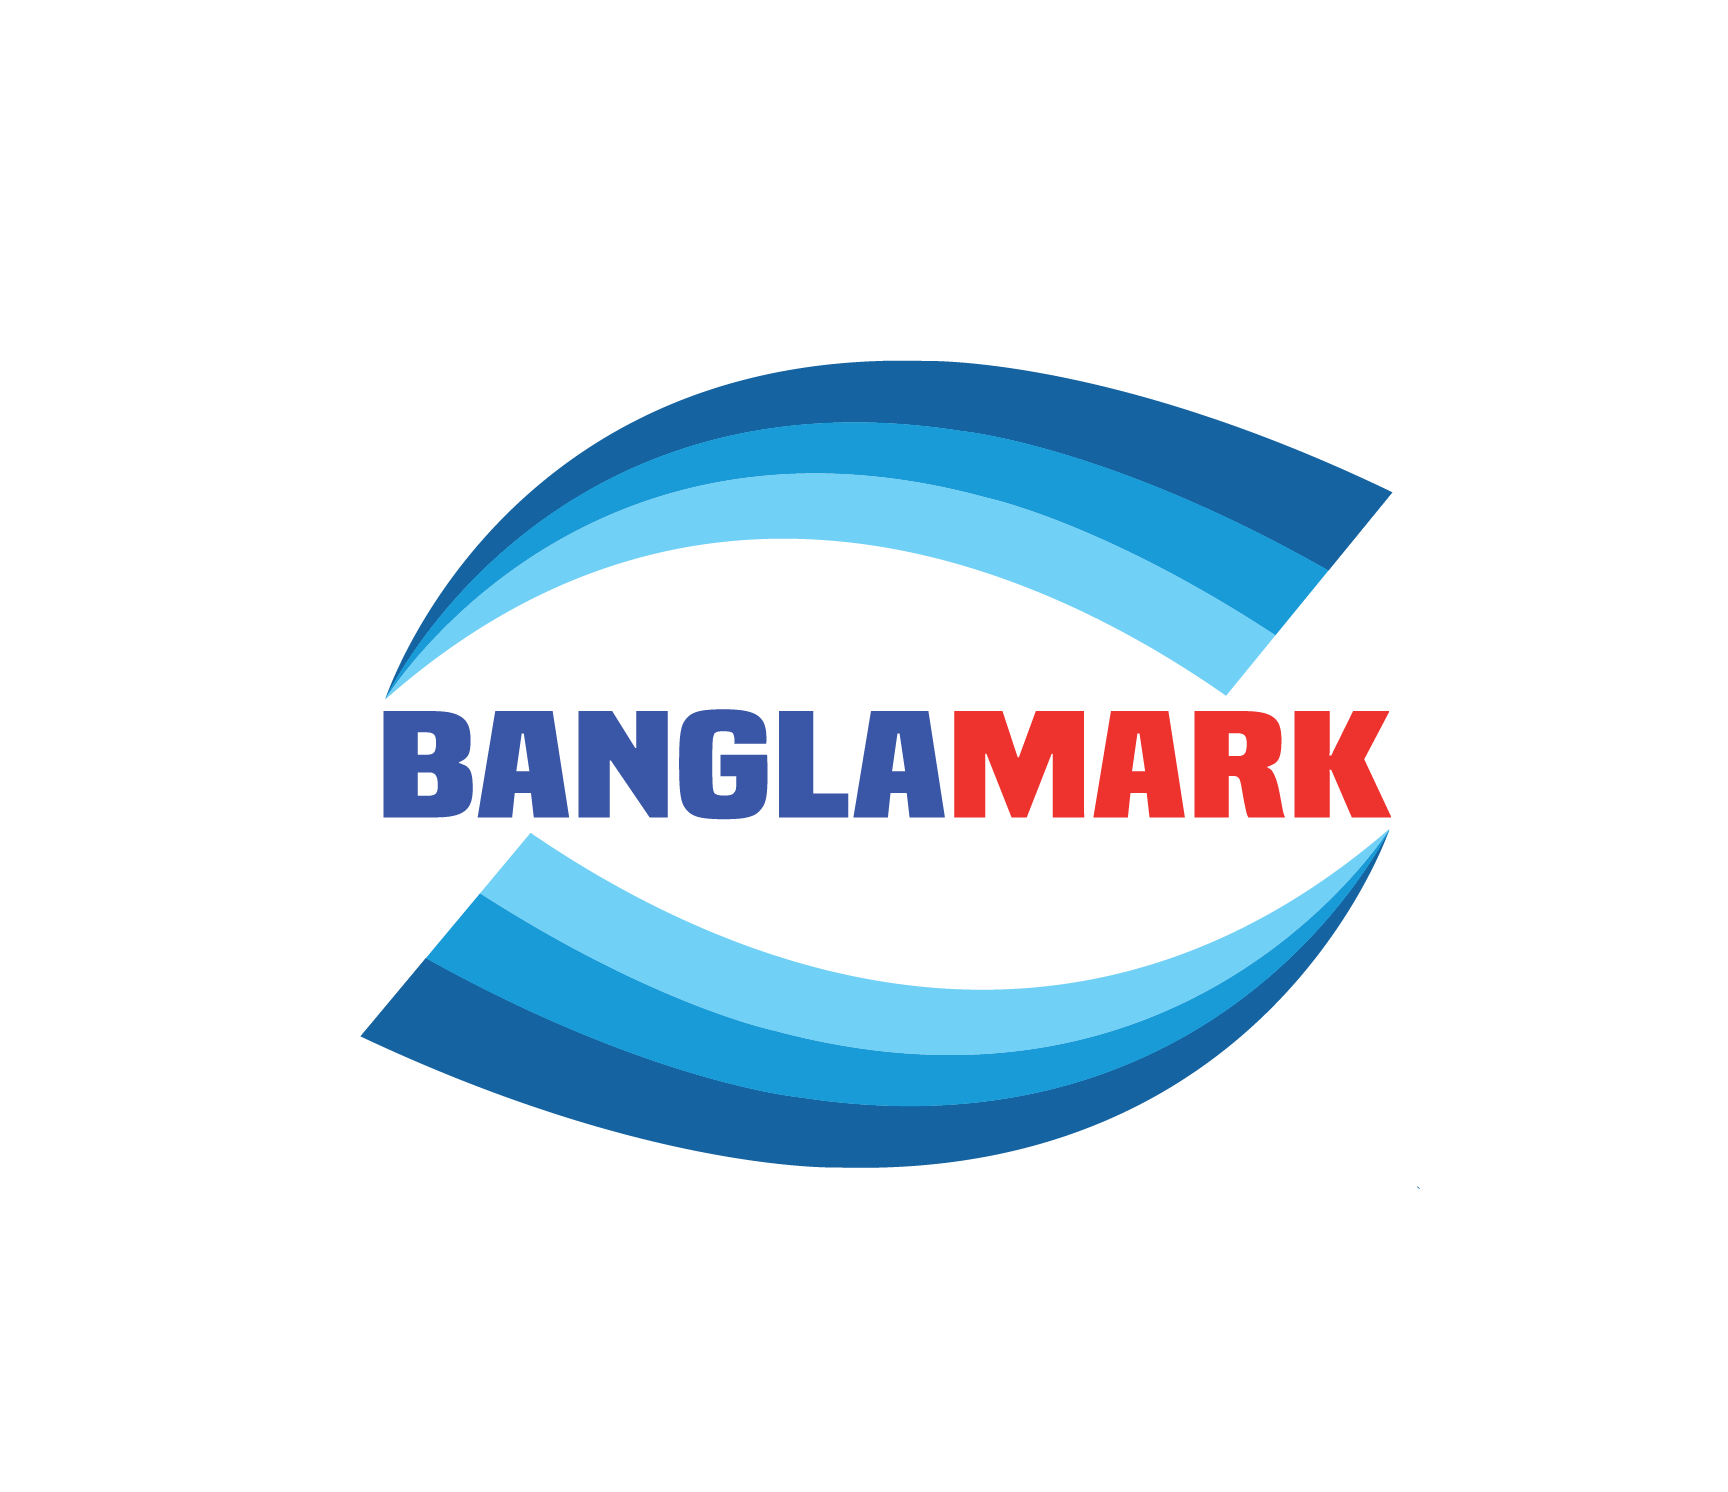 Banglamark